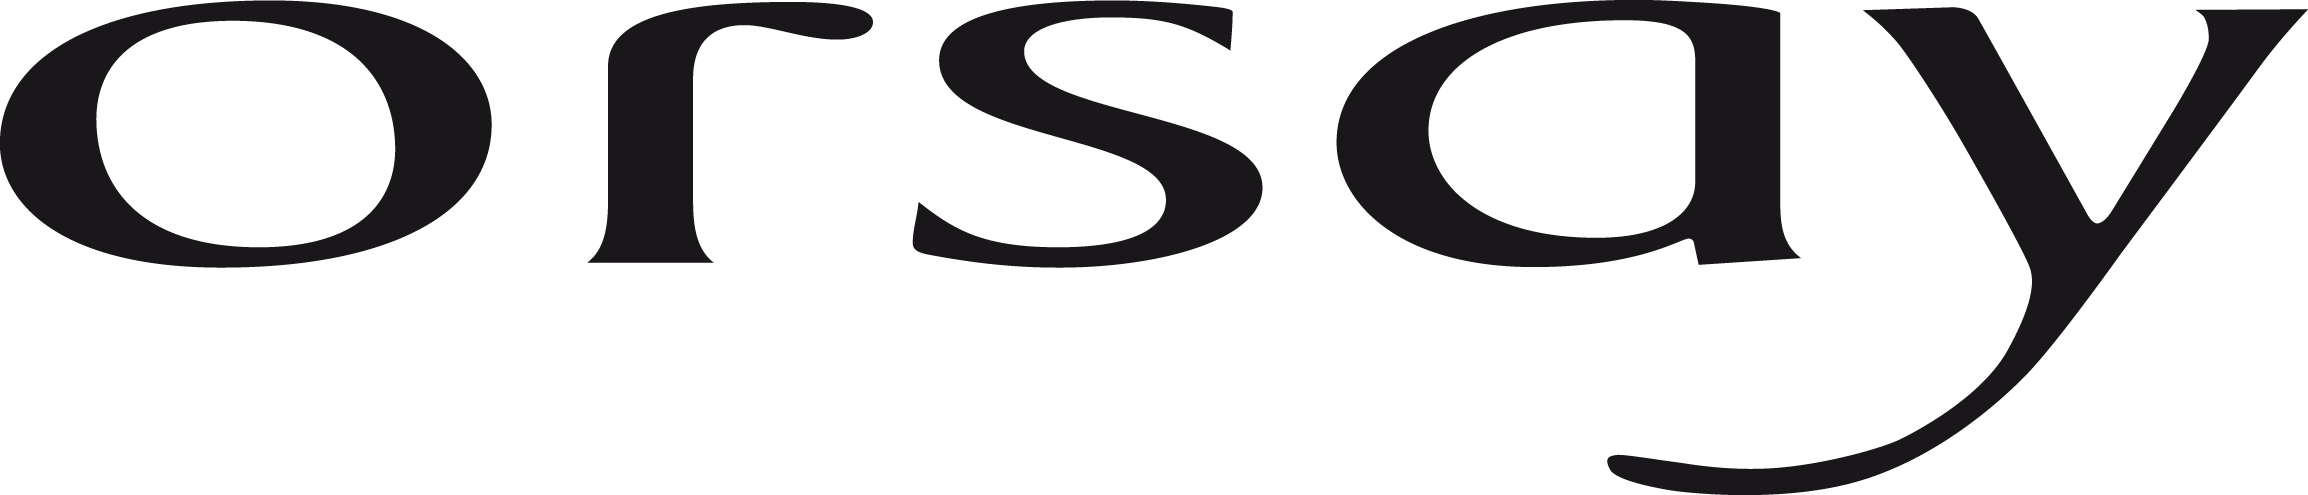 ORSAY Logo black